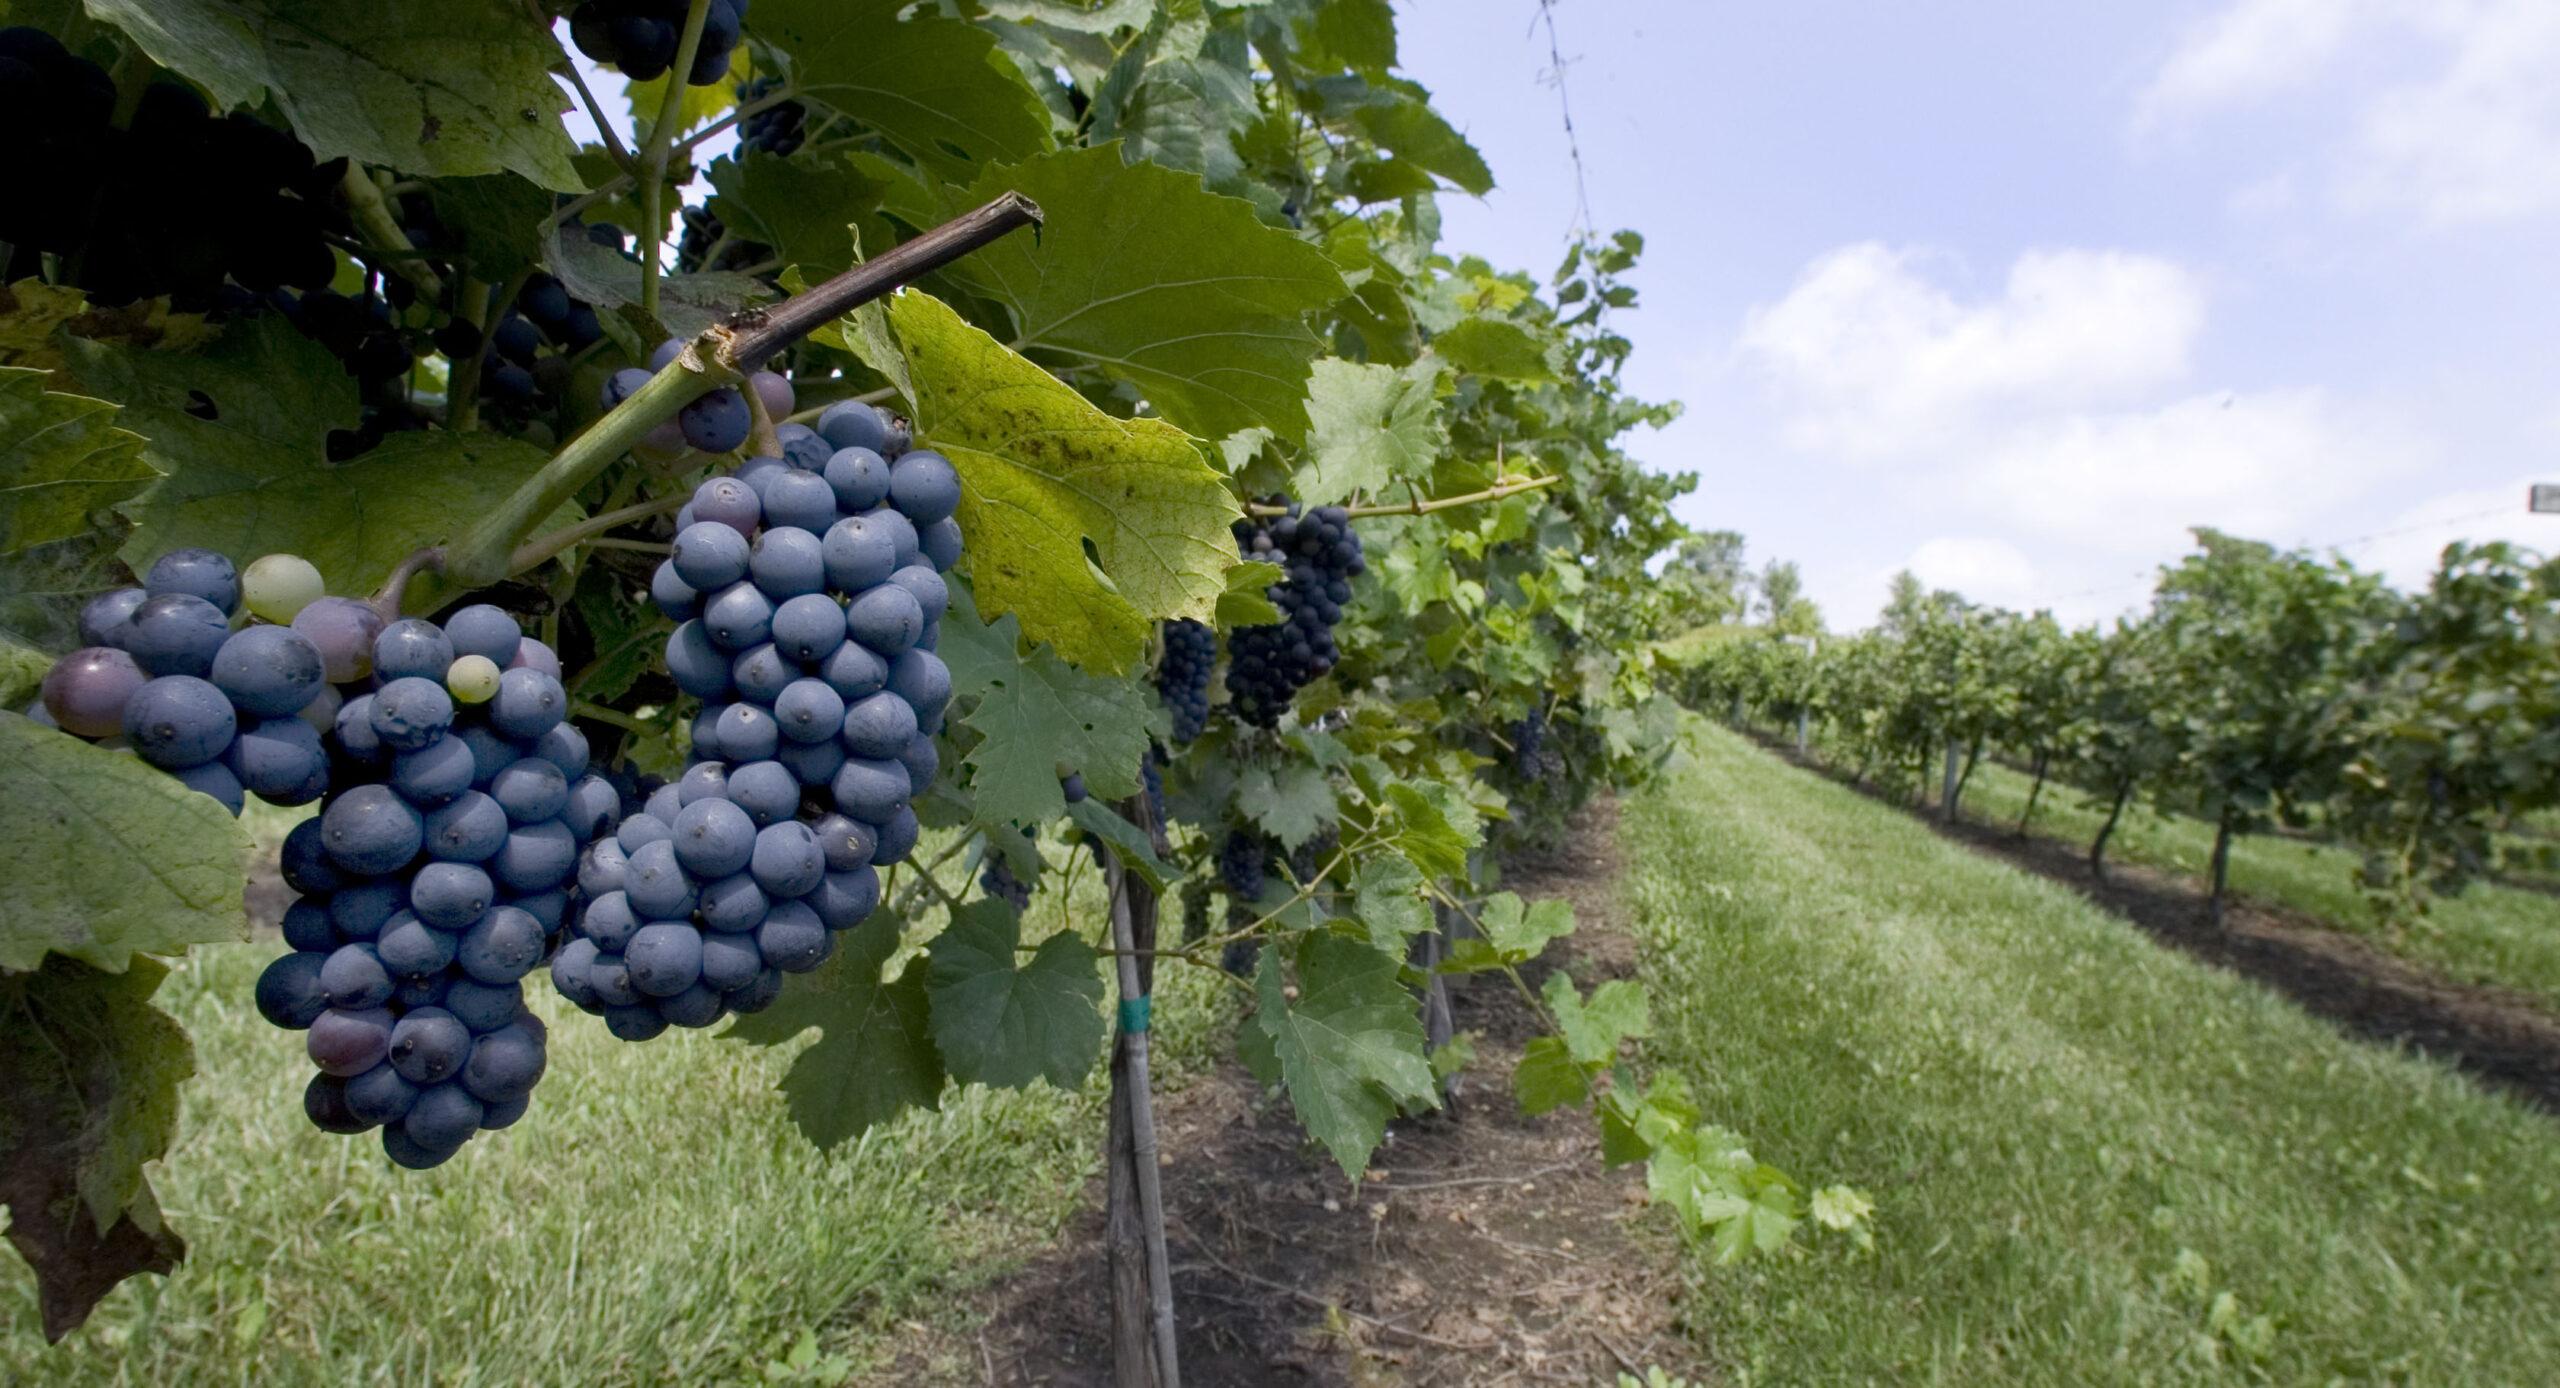 Merechal foch grapes ripen at Botham Vineyards & Winery near Barneveld, Wis